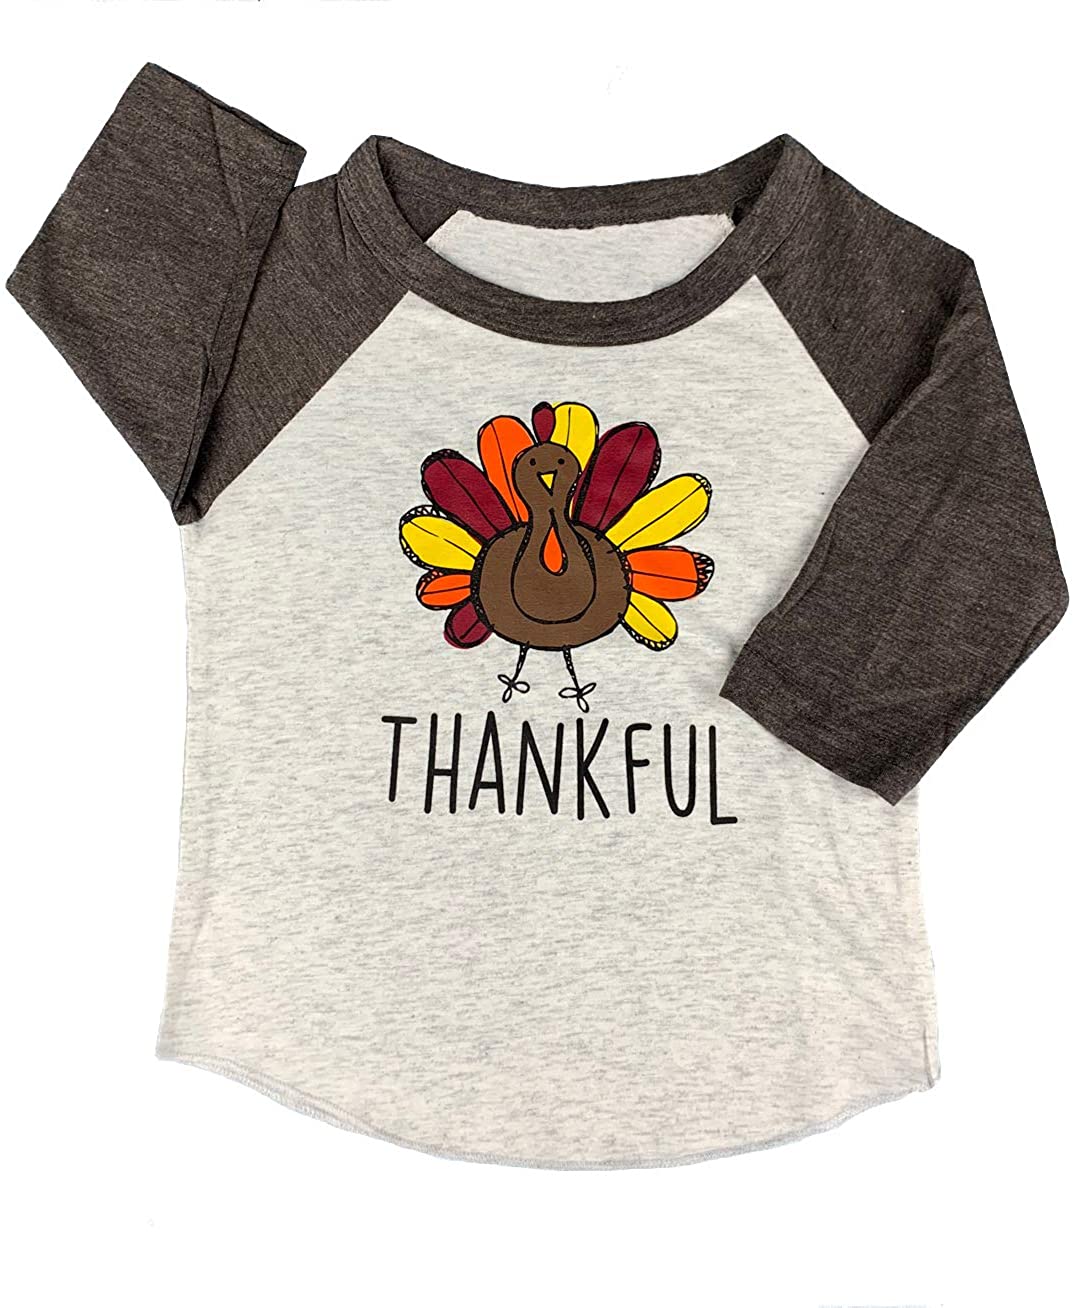 Toddler & Baby Thanksgiving Outfit Turkey T-Shirt SoRock Youth Kids 